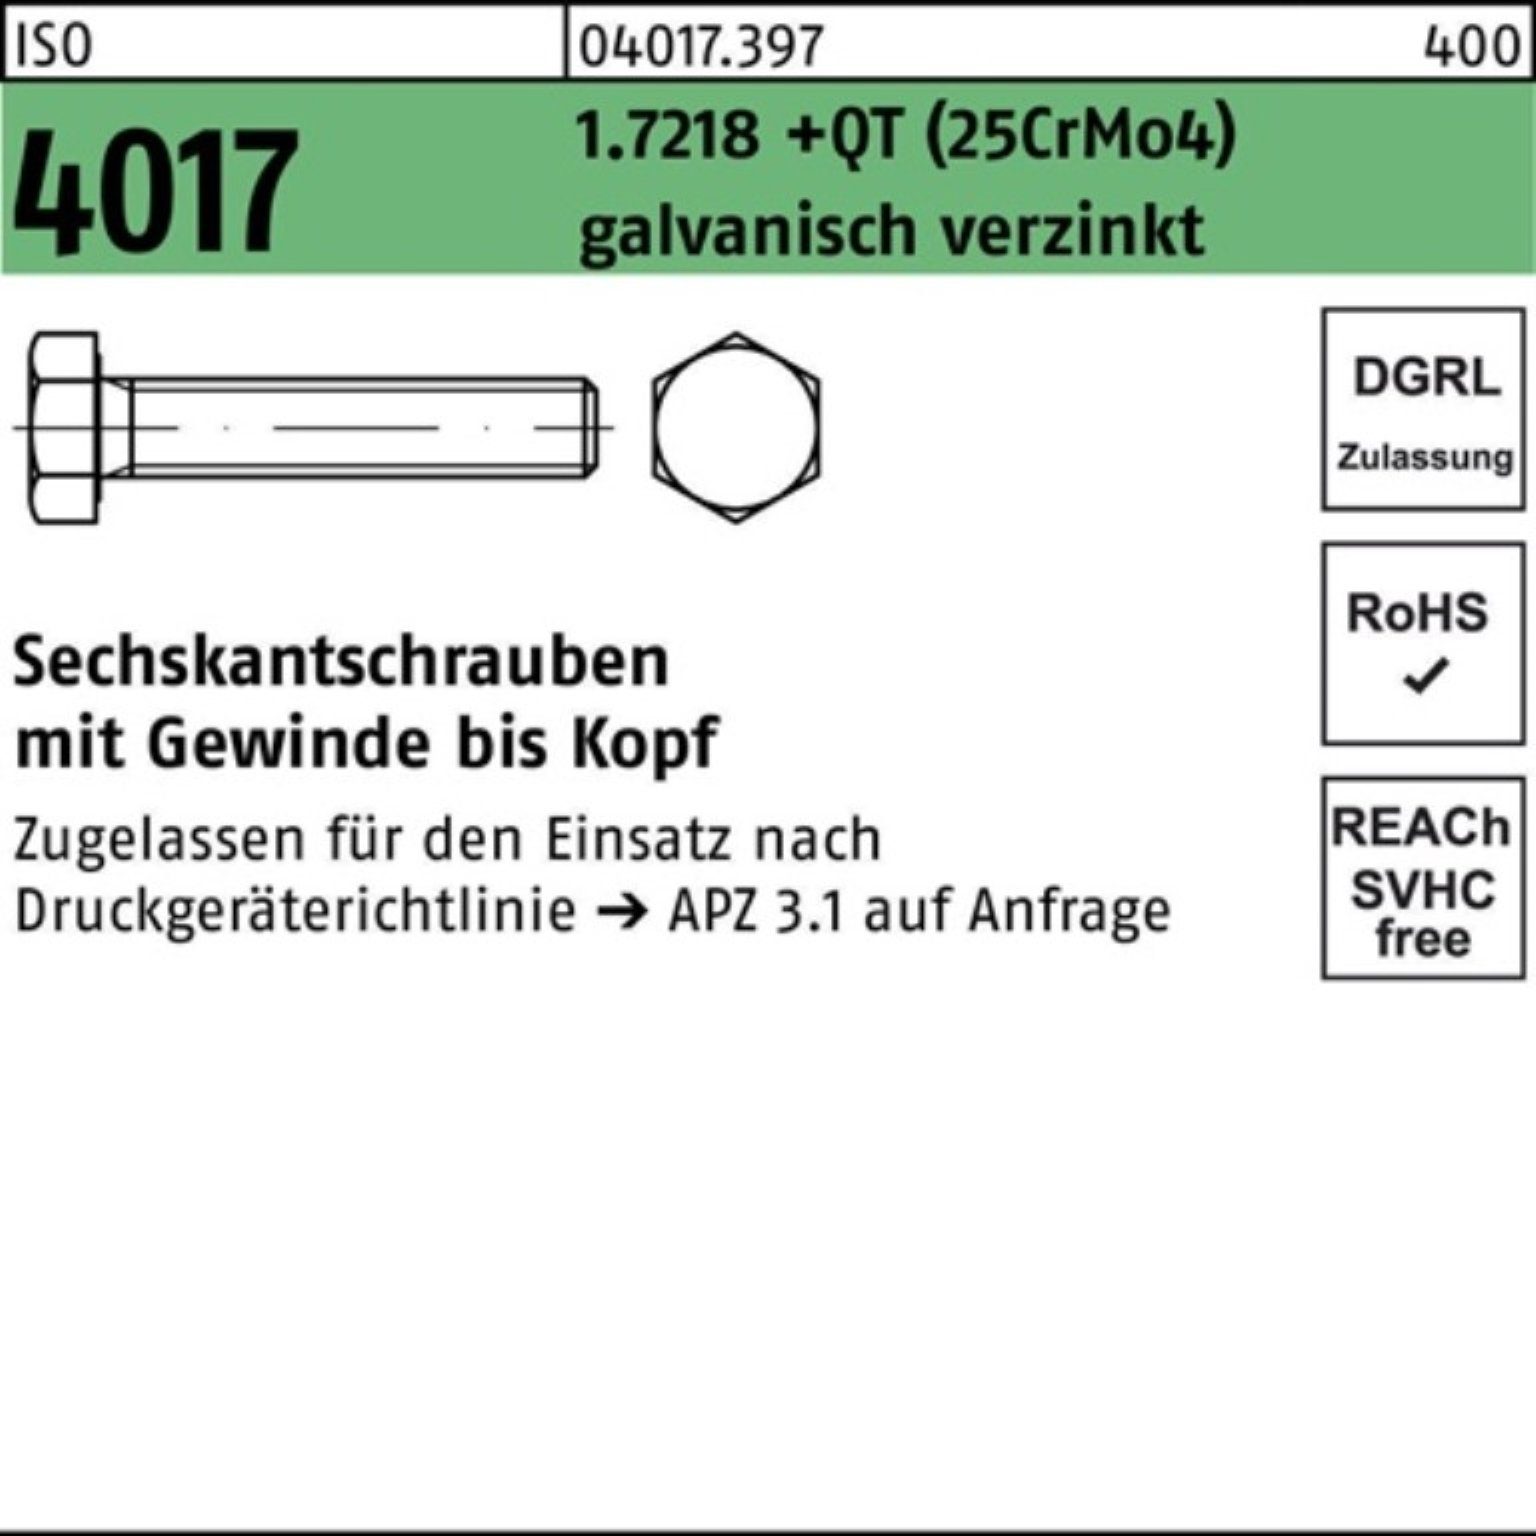 g 100er ISO Sechskantschraube Pack +QT 1.7218 (25CrMo4) 4017 M20x70 VG Sechskantschraube Bufab